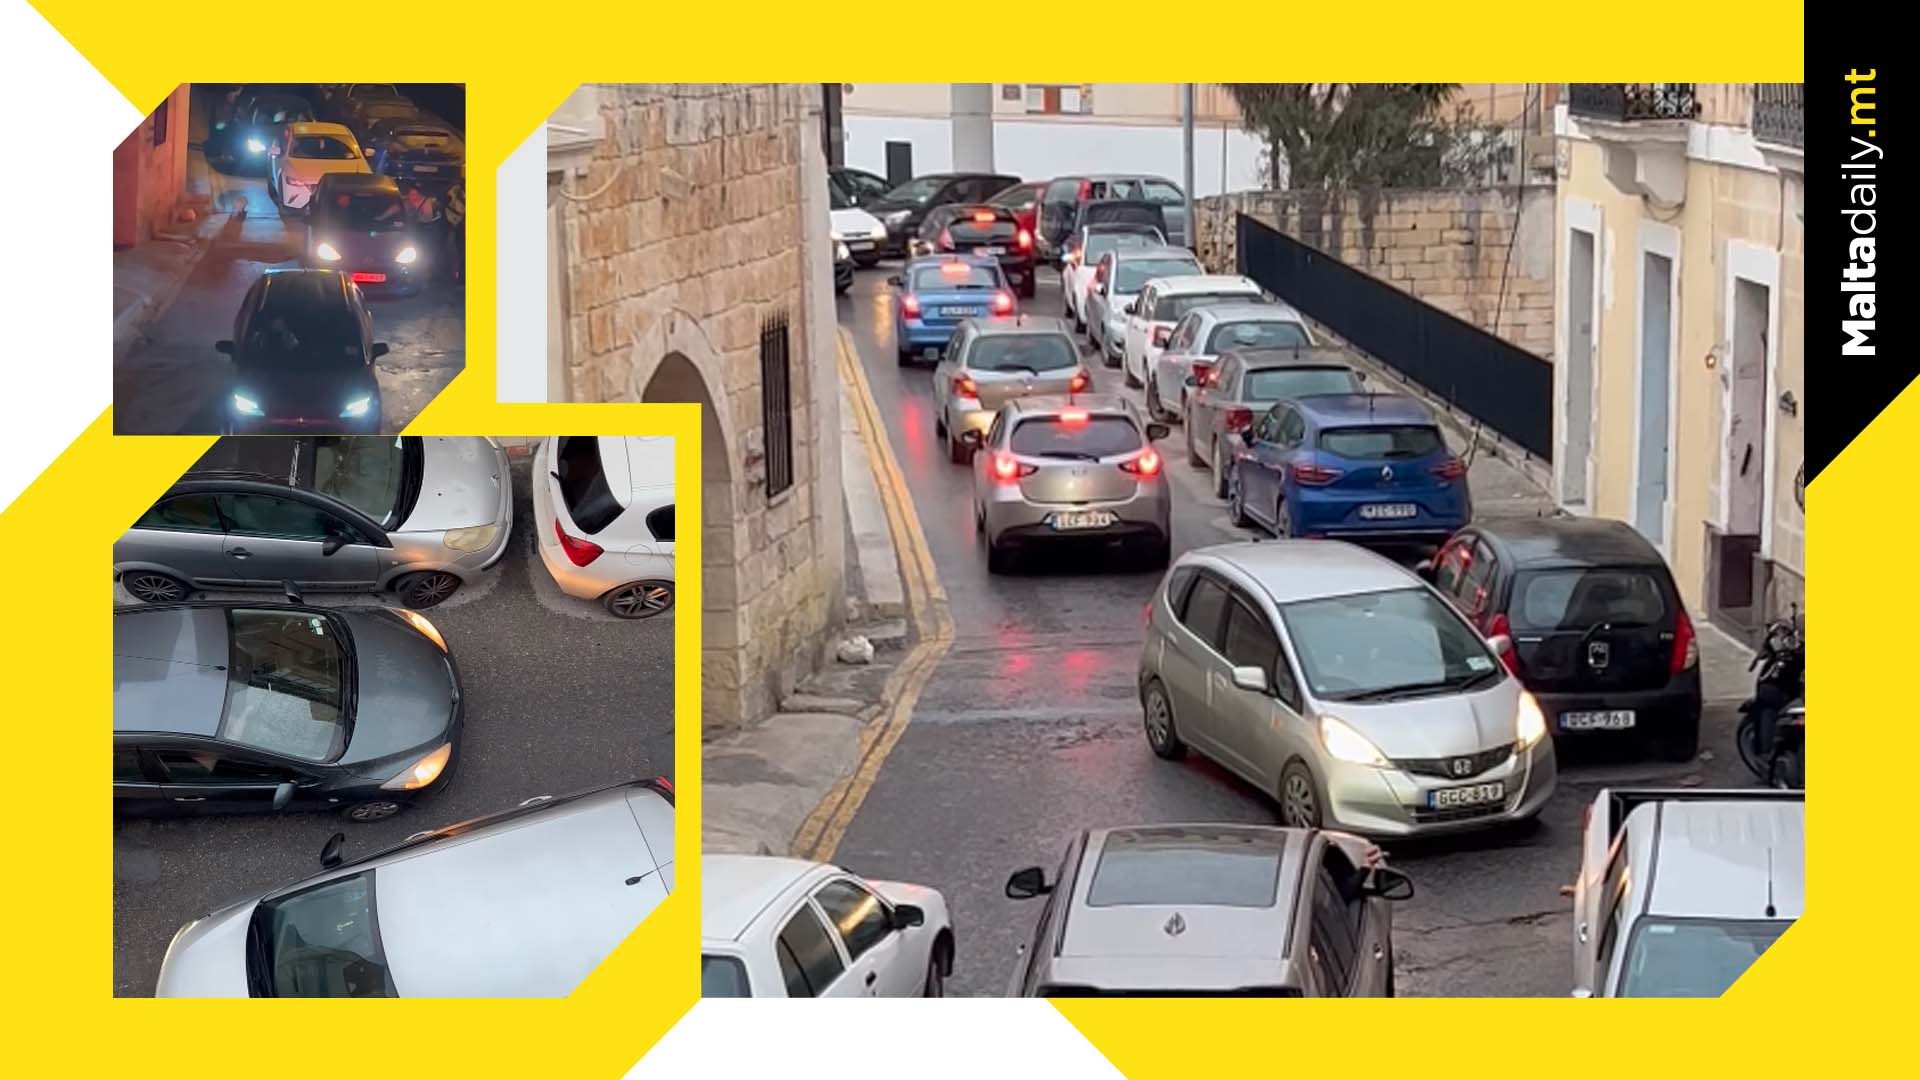 Facebook videos show narrow ‘two way’ road car jams in Imsida